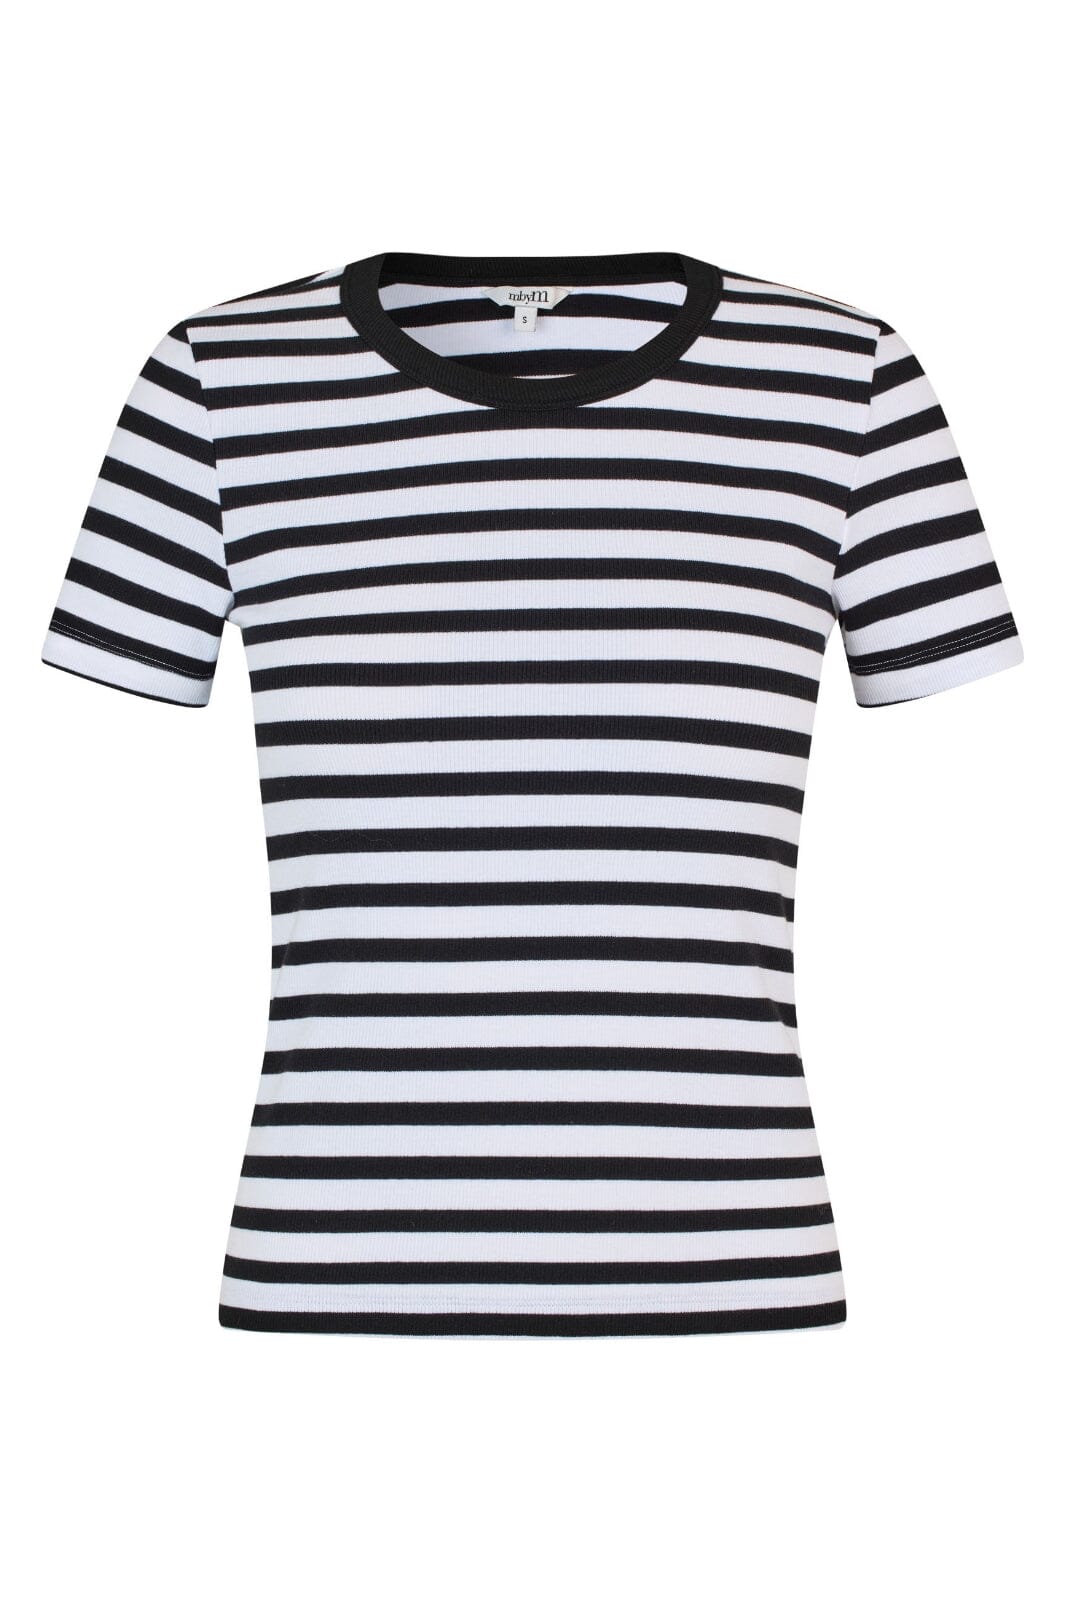 MbyM - Otis-M - P13 White Black Stripe T-shirts 